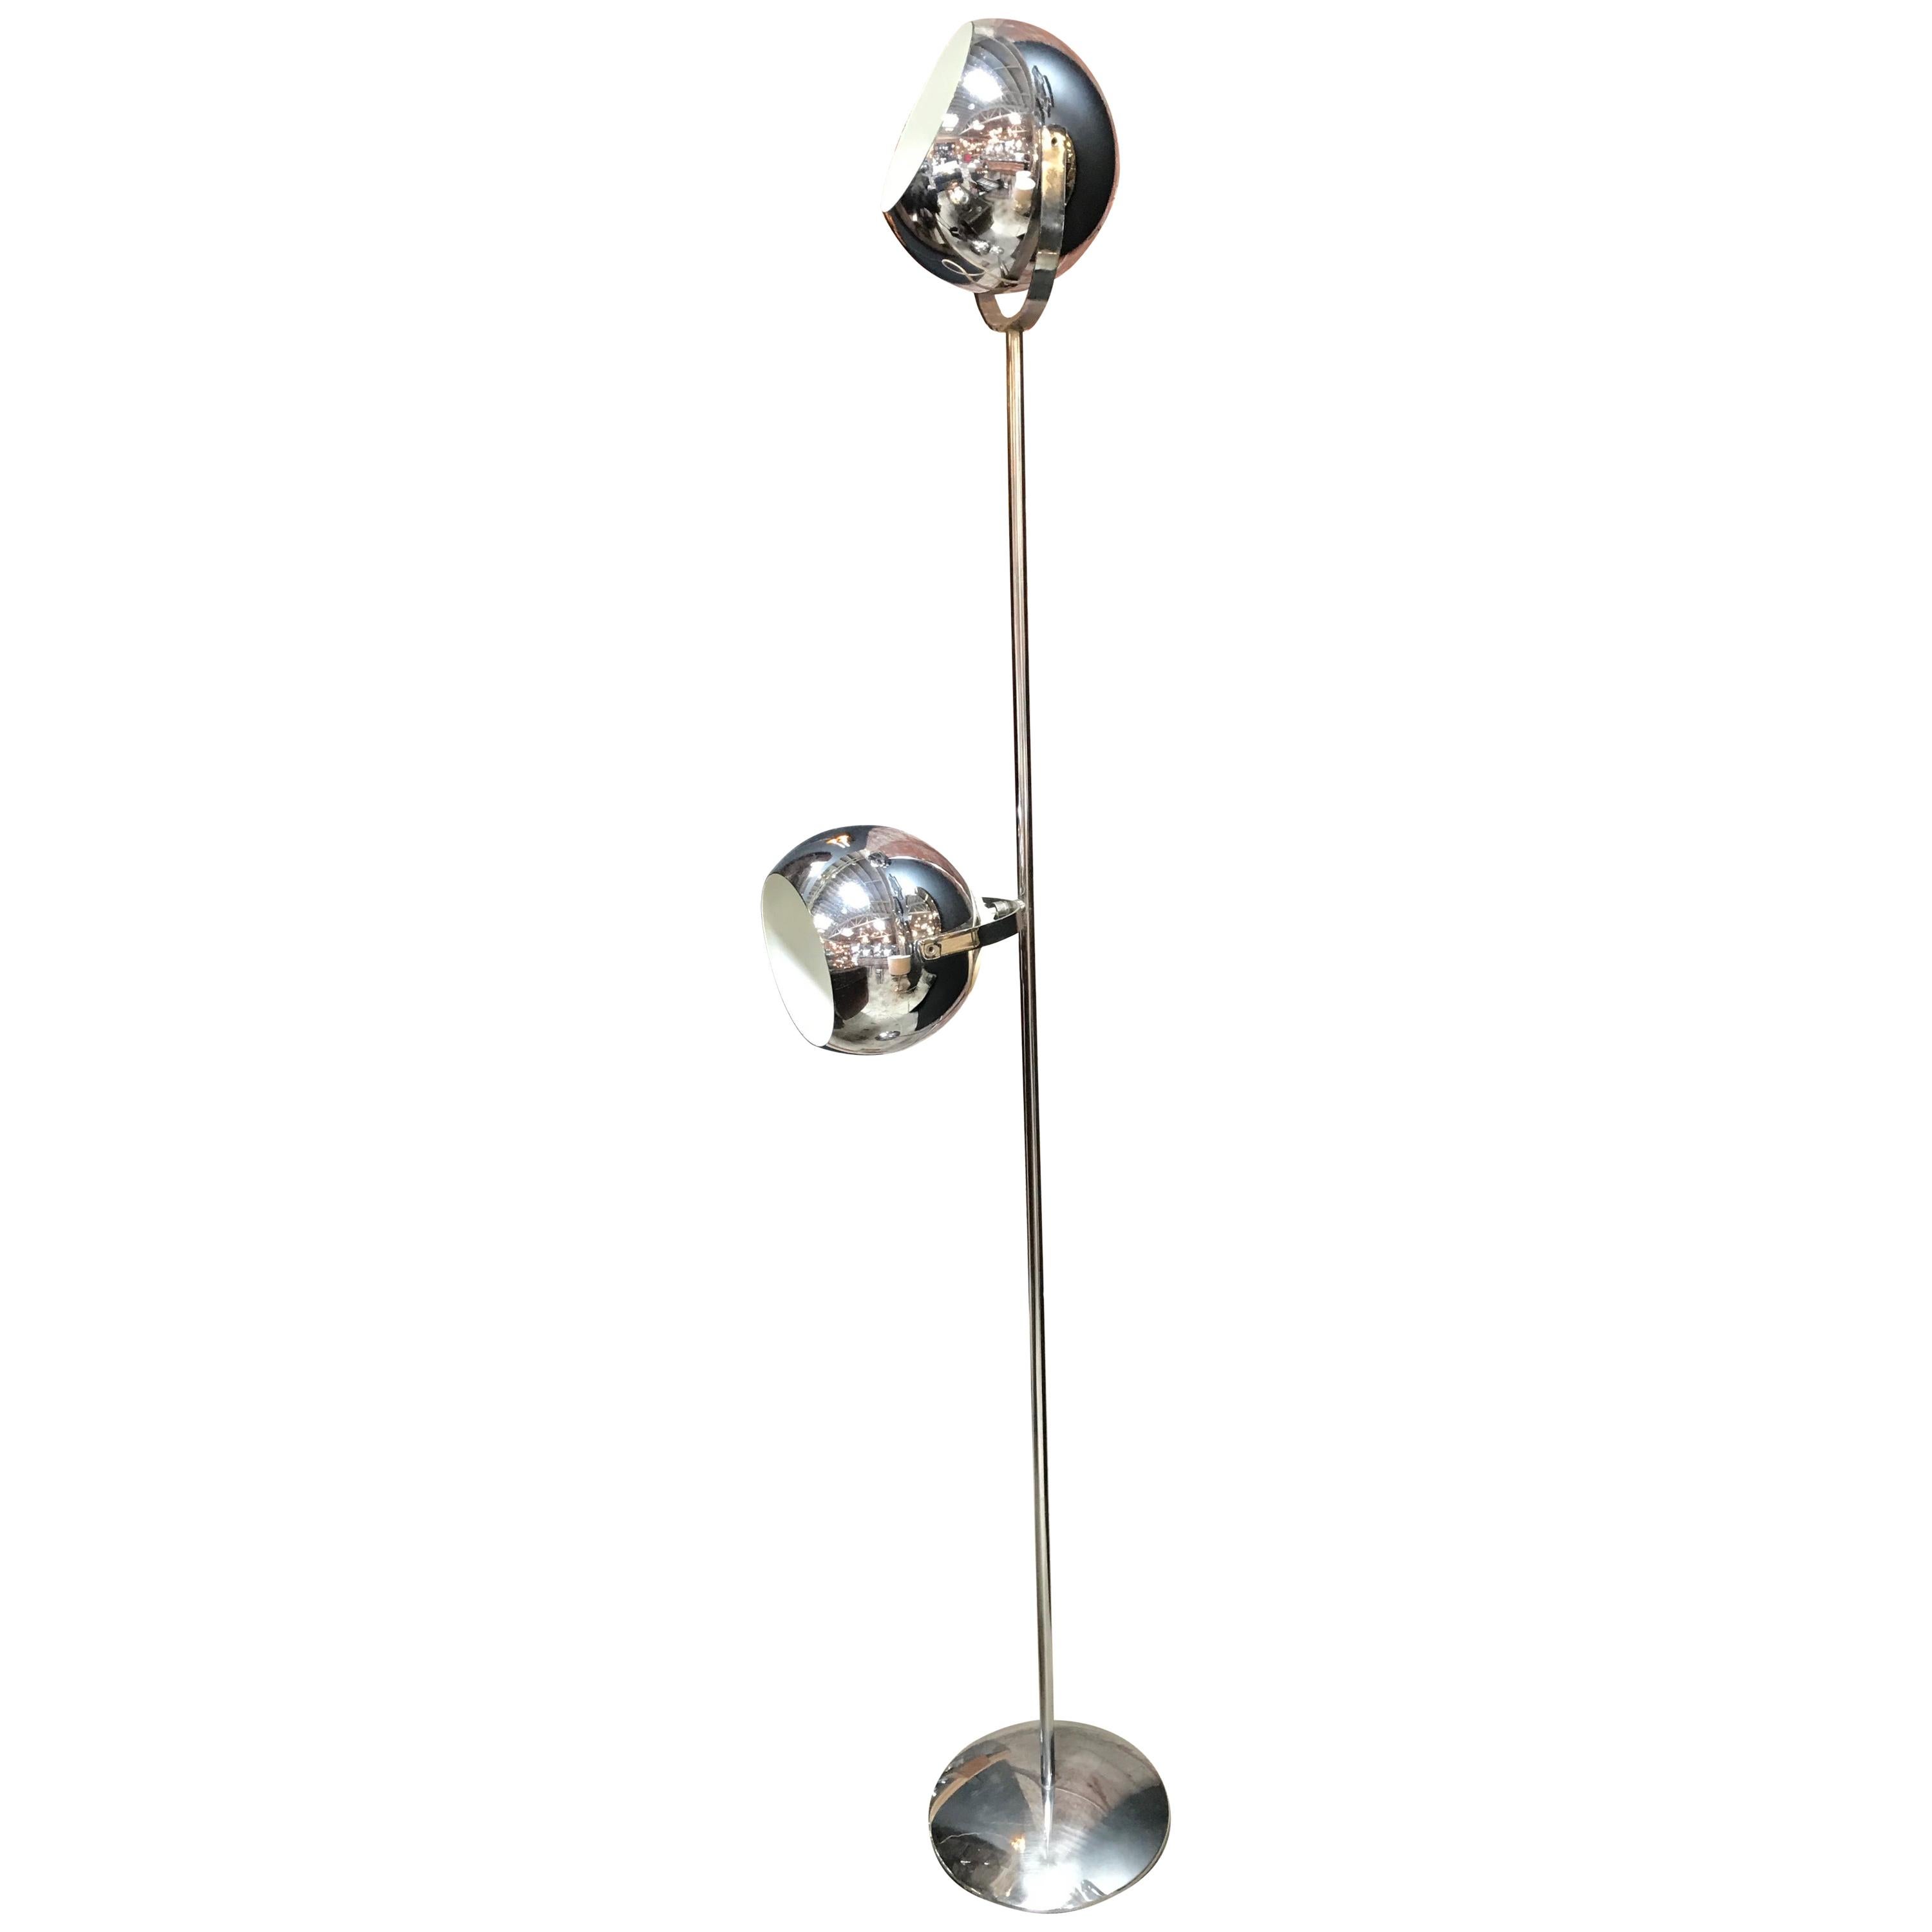 Italian Adjustable Floor Lamp with Articulating Globe Shades, 1970s